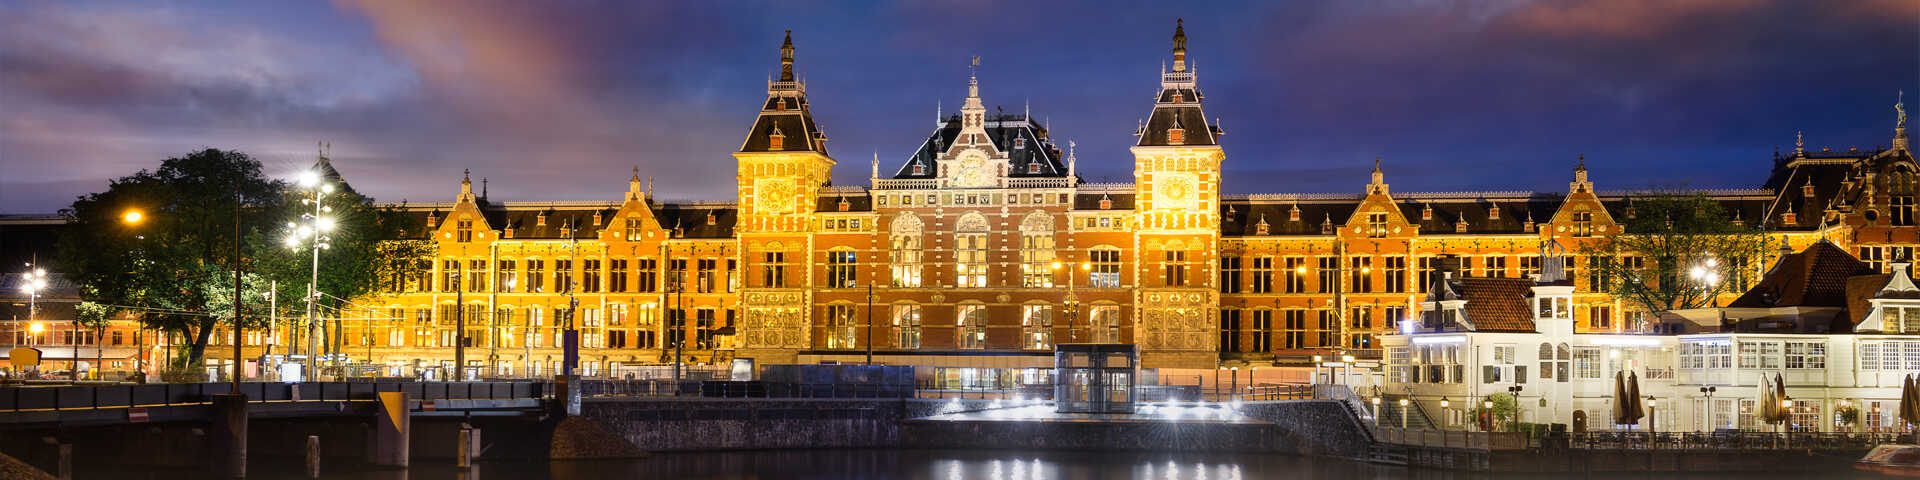 The Stedelijk Museum Amsterdam